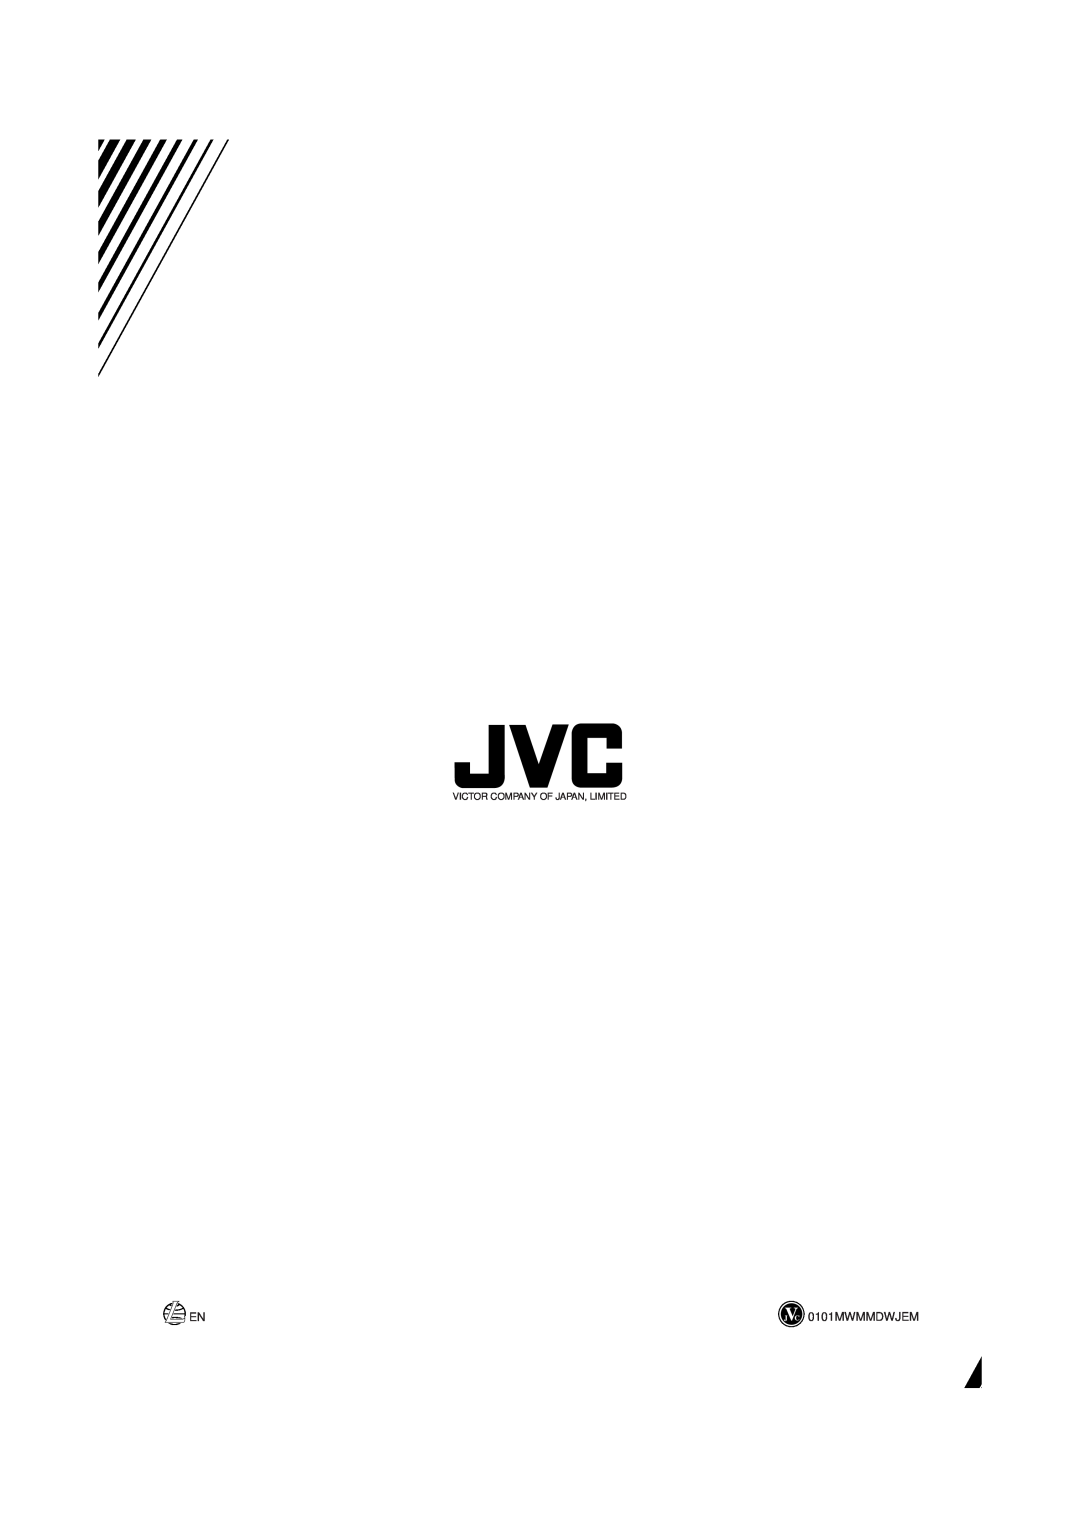 JVC UX-P4R, CA-UXP6R, CA-UXP4R, SP-UXP6, SP-UXP4, UX-P6R manual 0101MWMMDWJEM, Victor Company Of Japan, Limited 